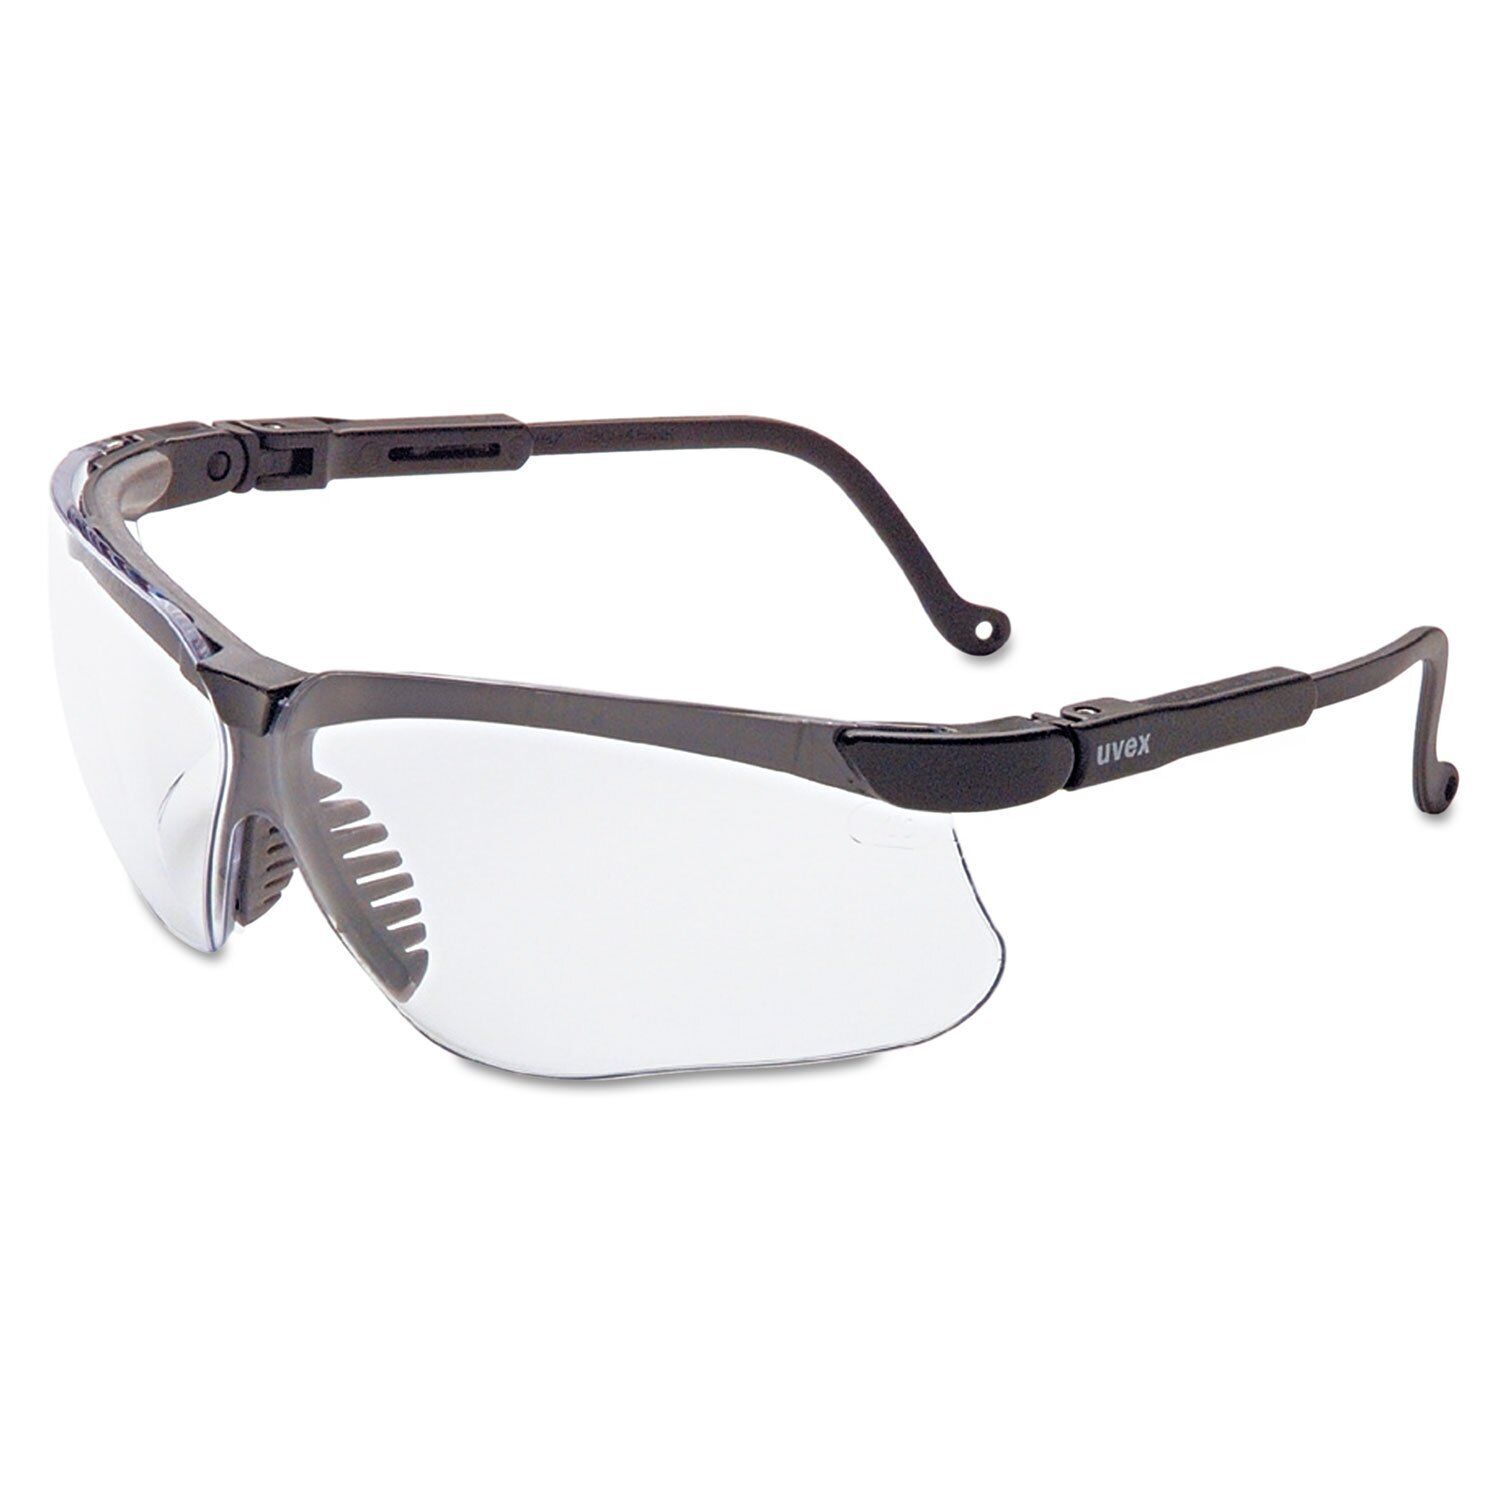 Uvex S3200X Honeywell Genesis Safety Eyewear, Black Frame -Pack of 4